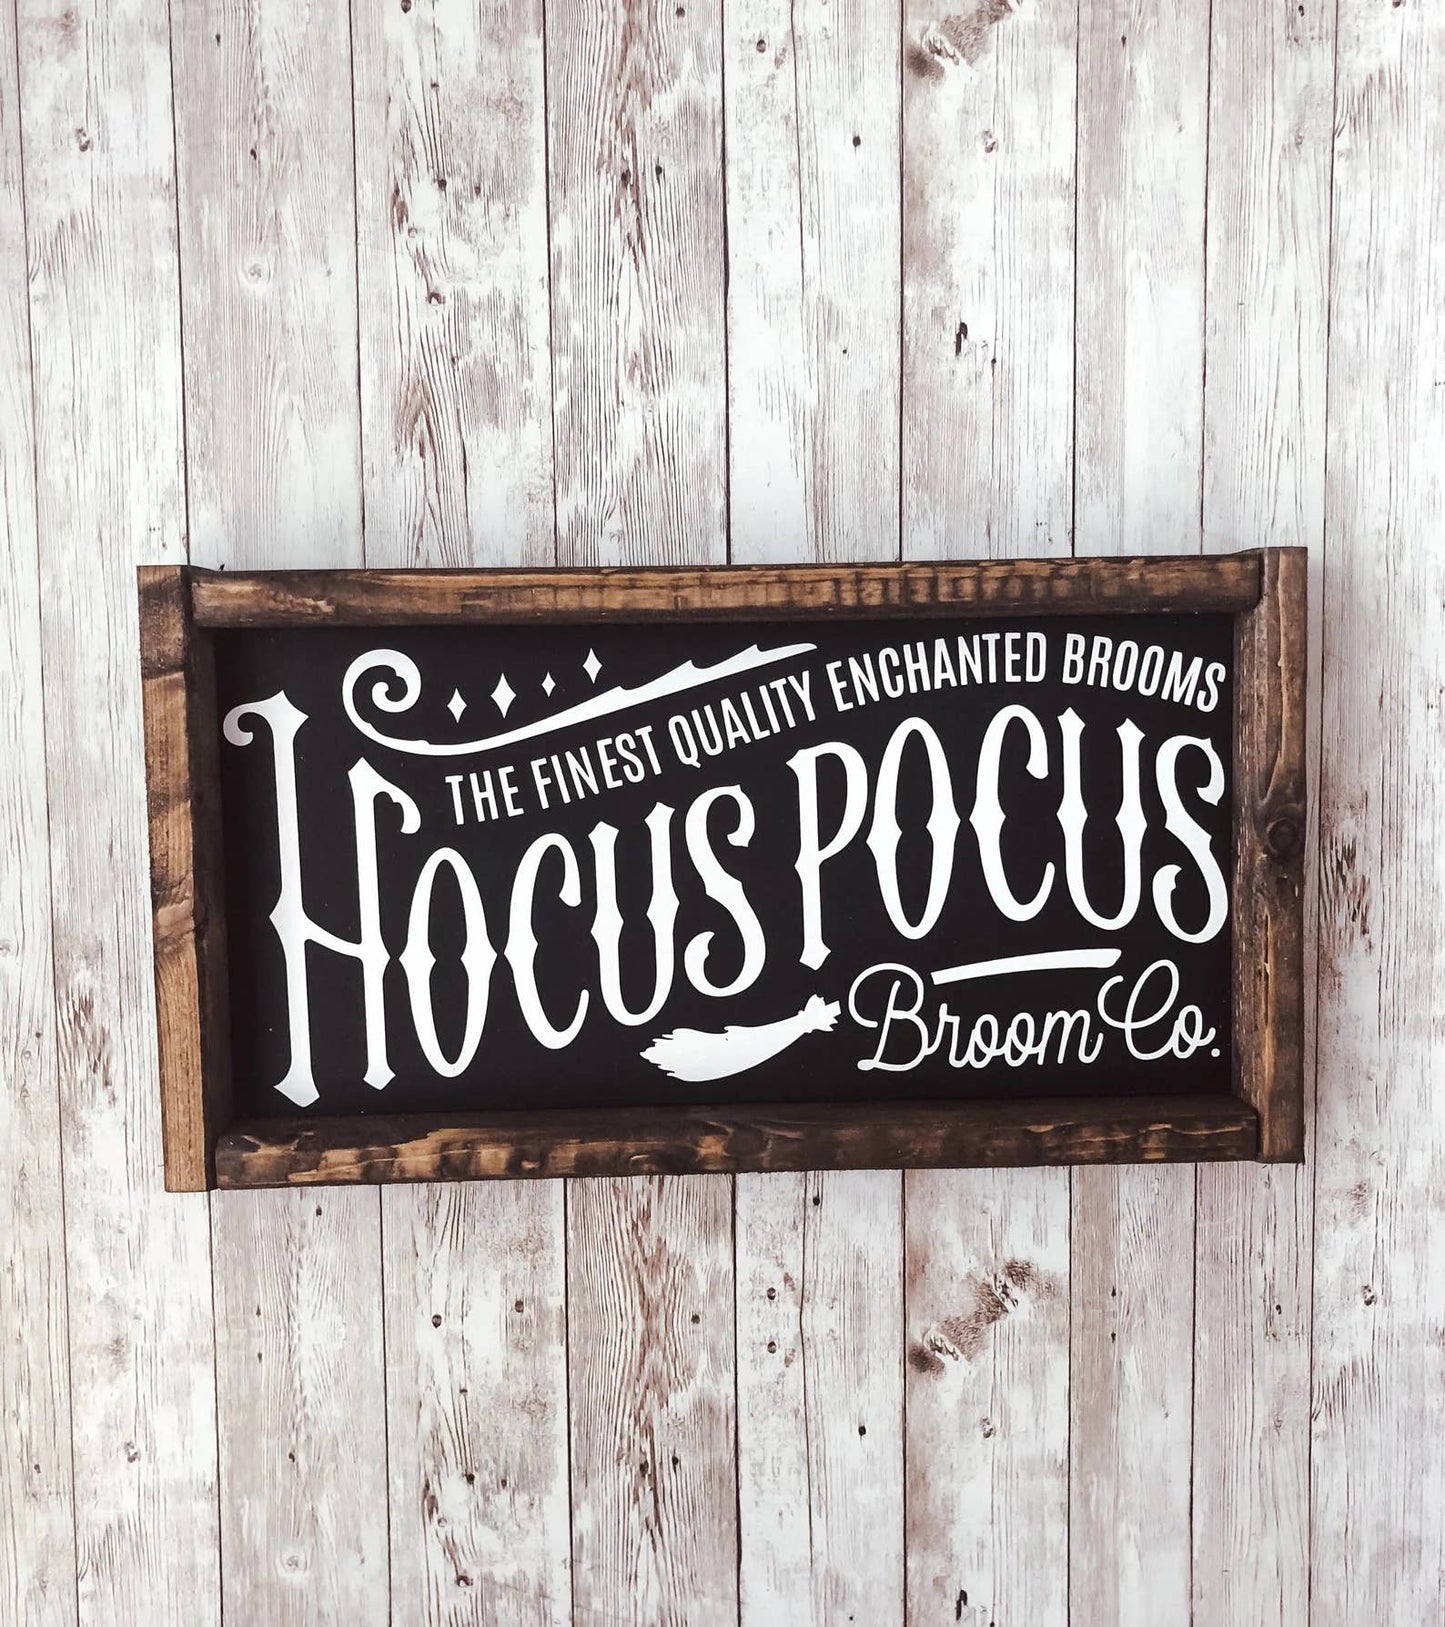 Hocus Pocus Halloween Sign 8x15"